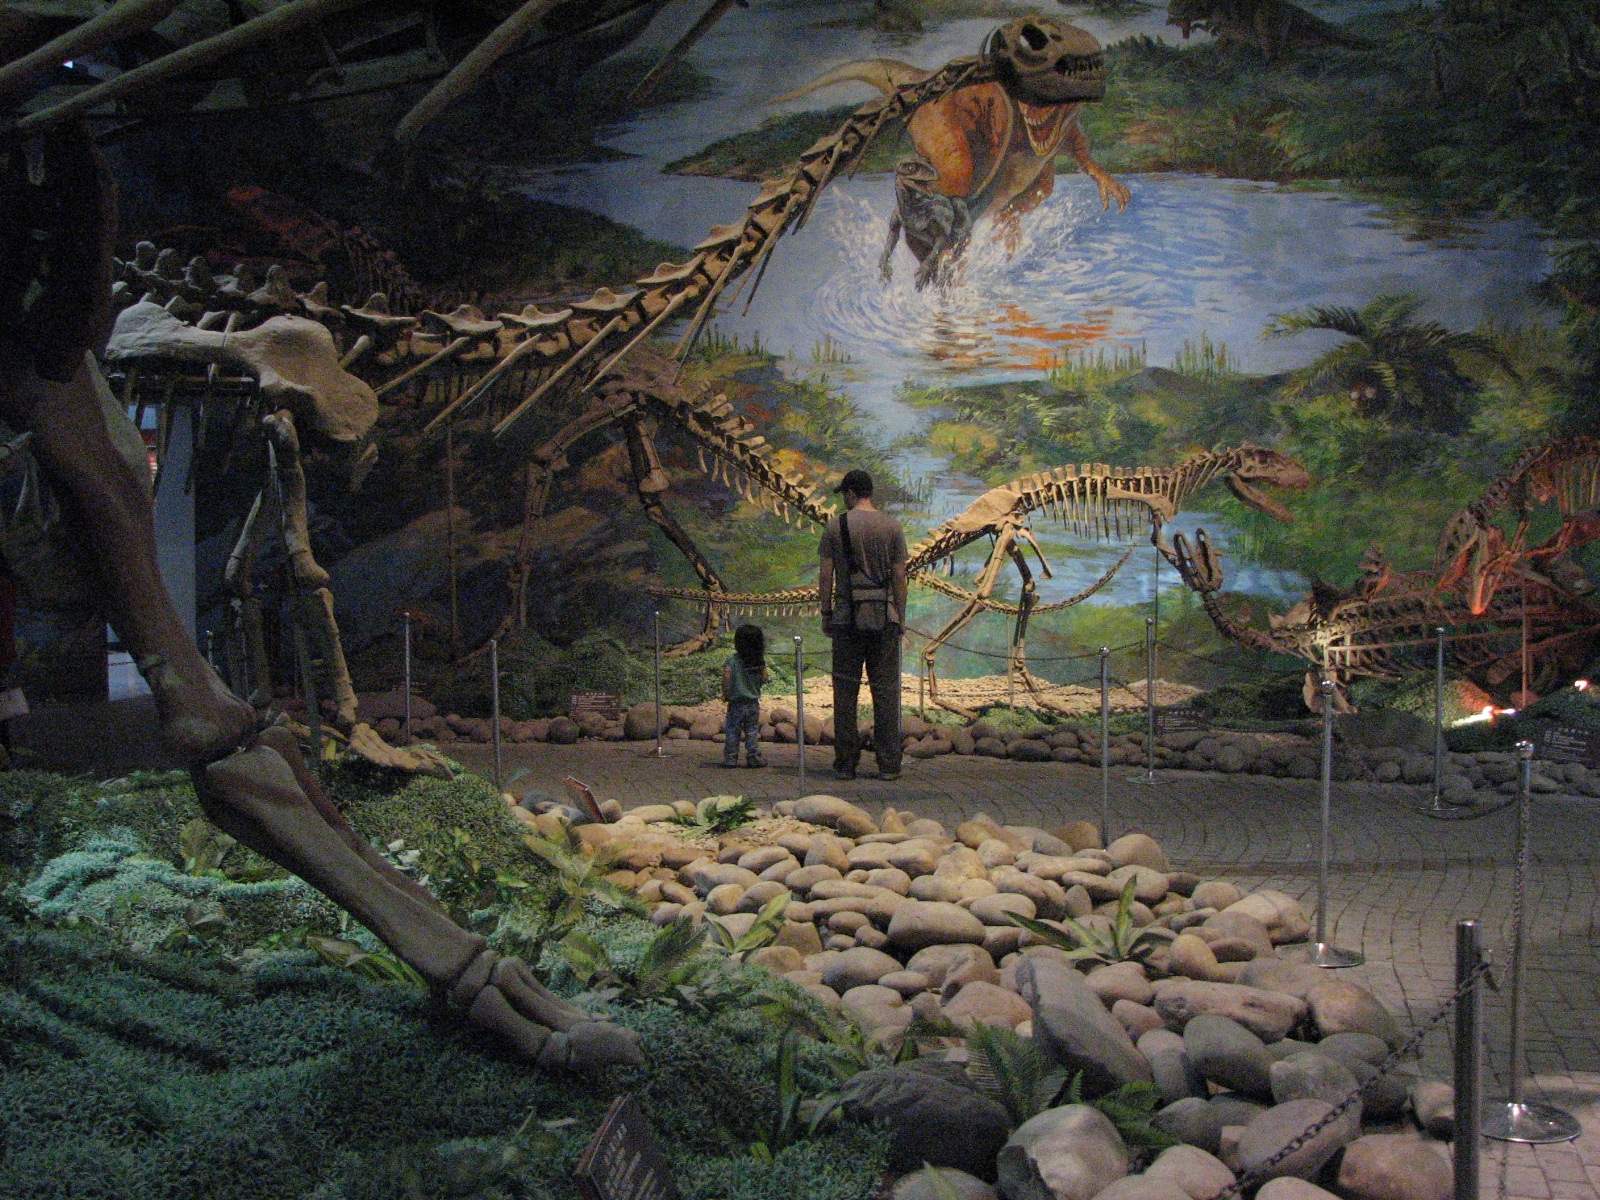 File:Zigong Dinosaur Museum 001.jpg - Wikimedia Commons